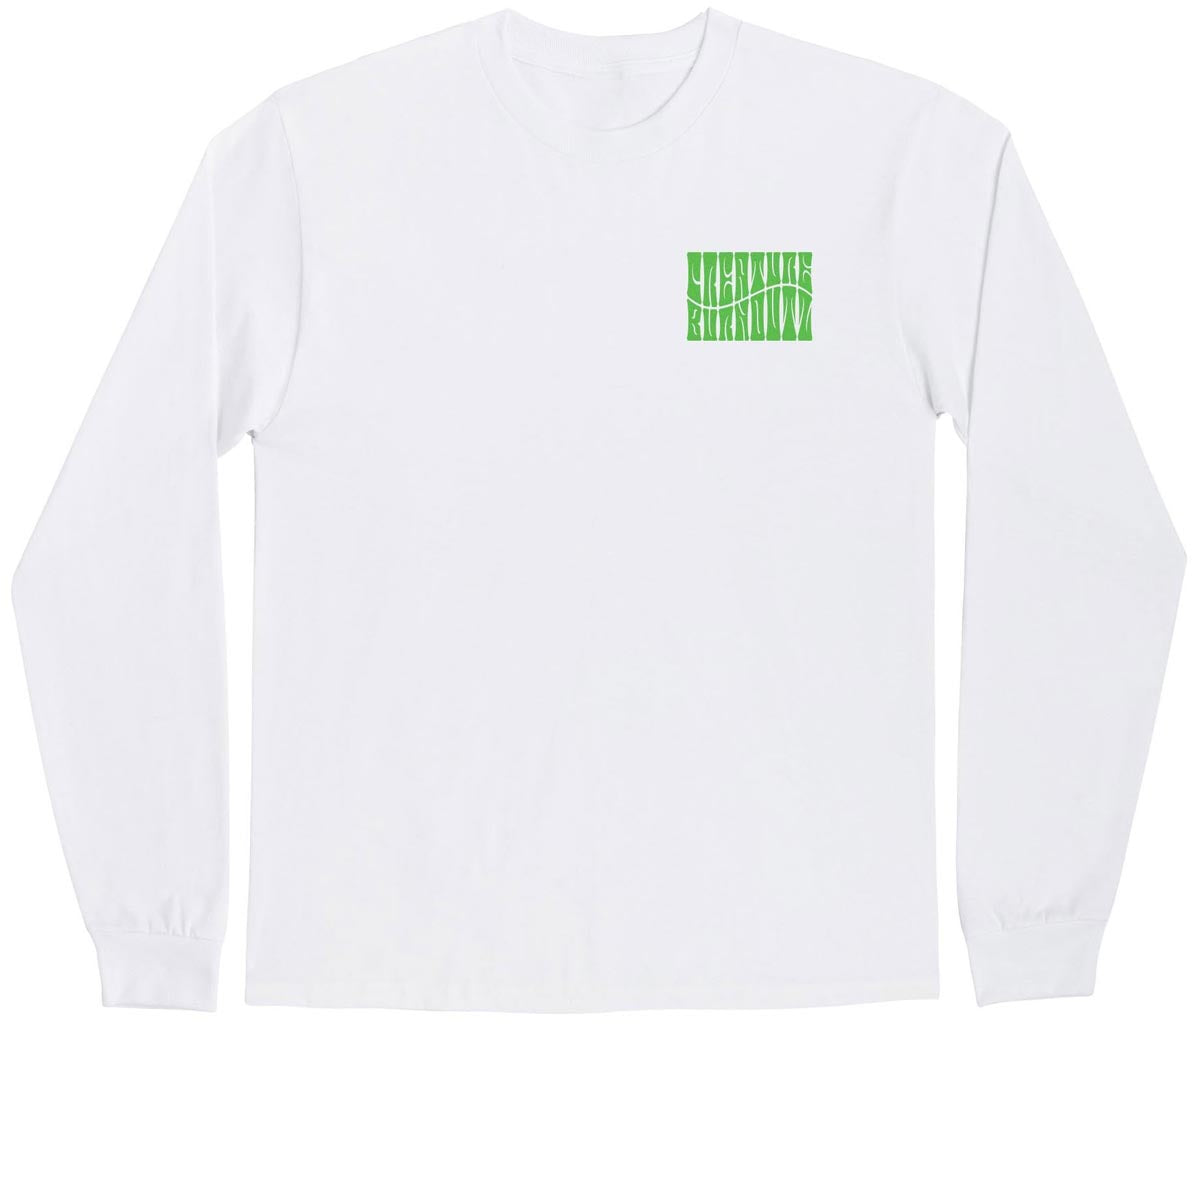 Creature Burnoutz VC Long Sleeve T-Shirt - White image 2